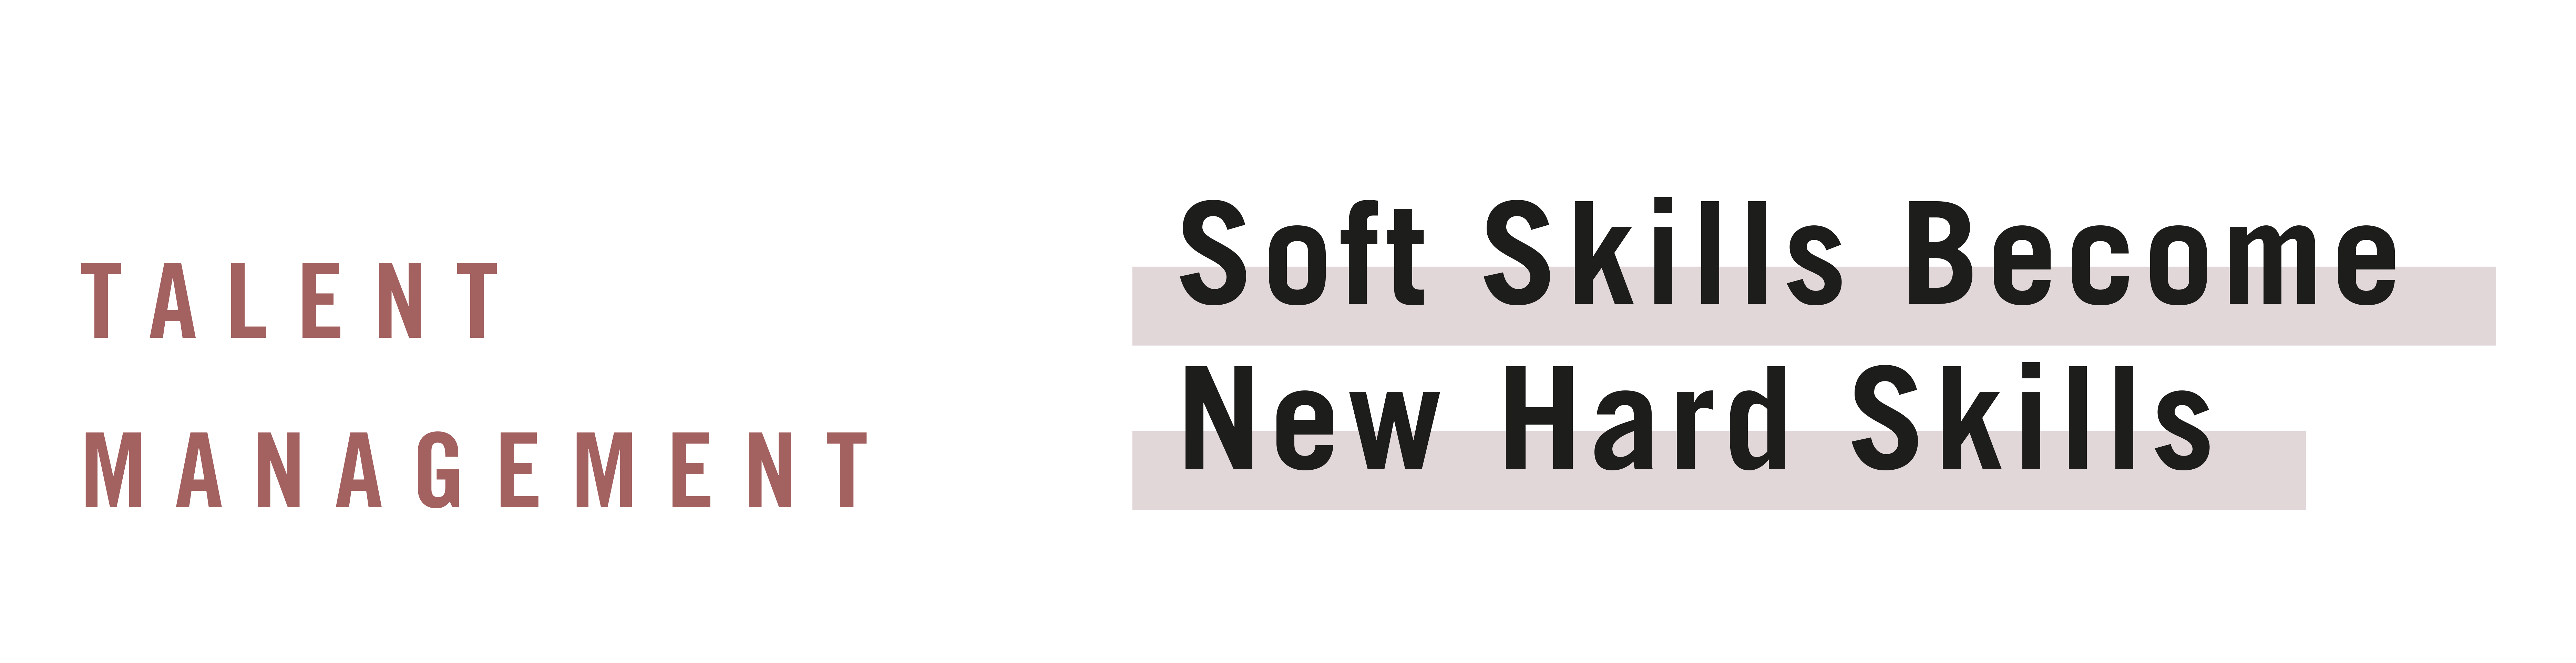 Soft Skills Become New Hard Skills